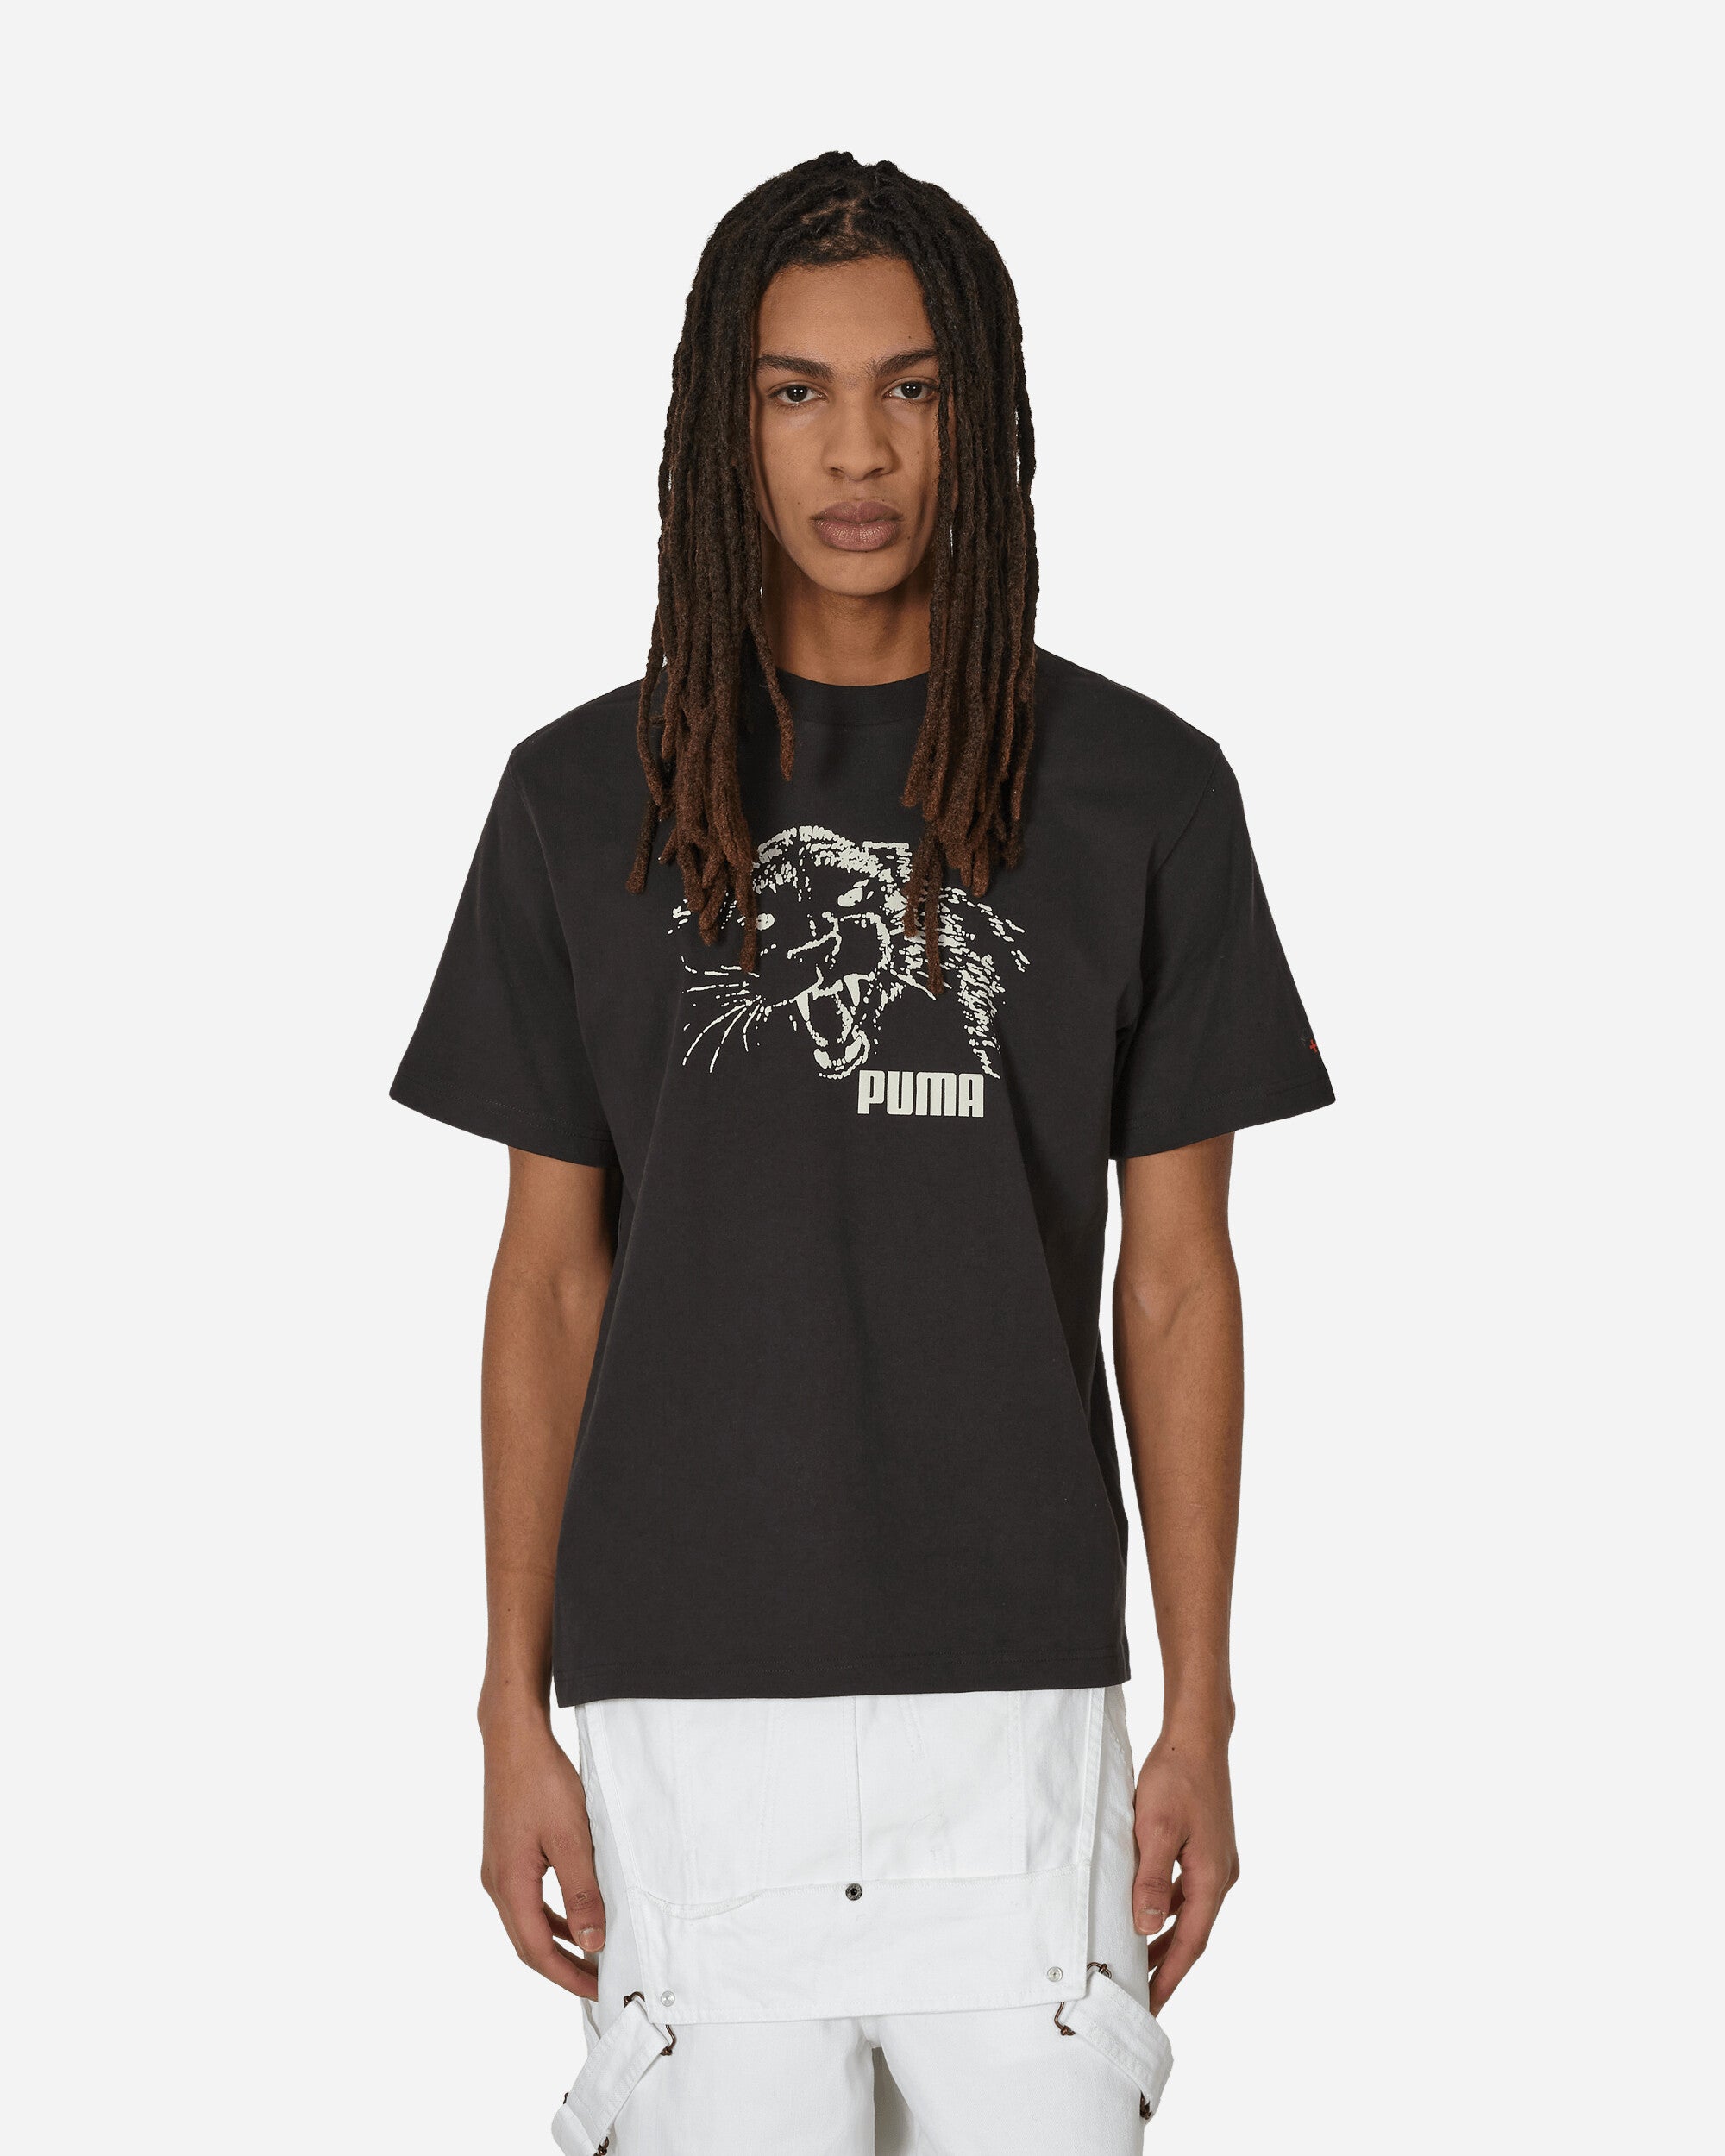 Puma Noah Graphic T-Shirt Black - Slam Jam® Official Store